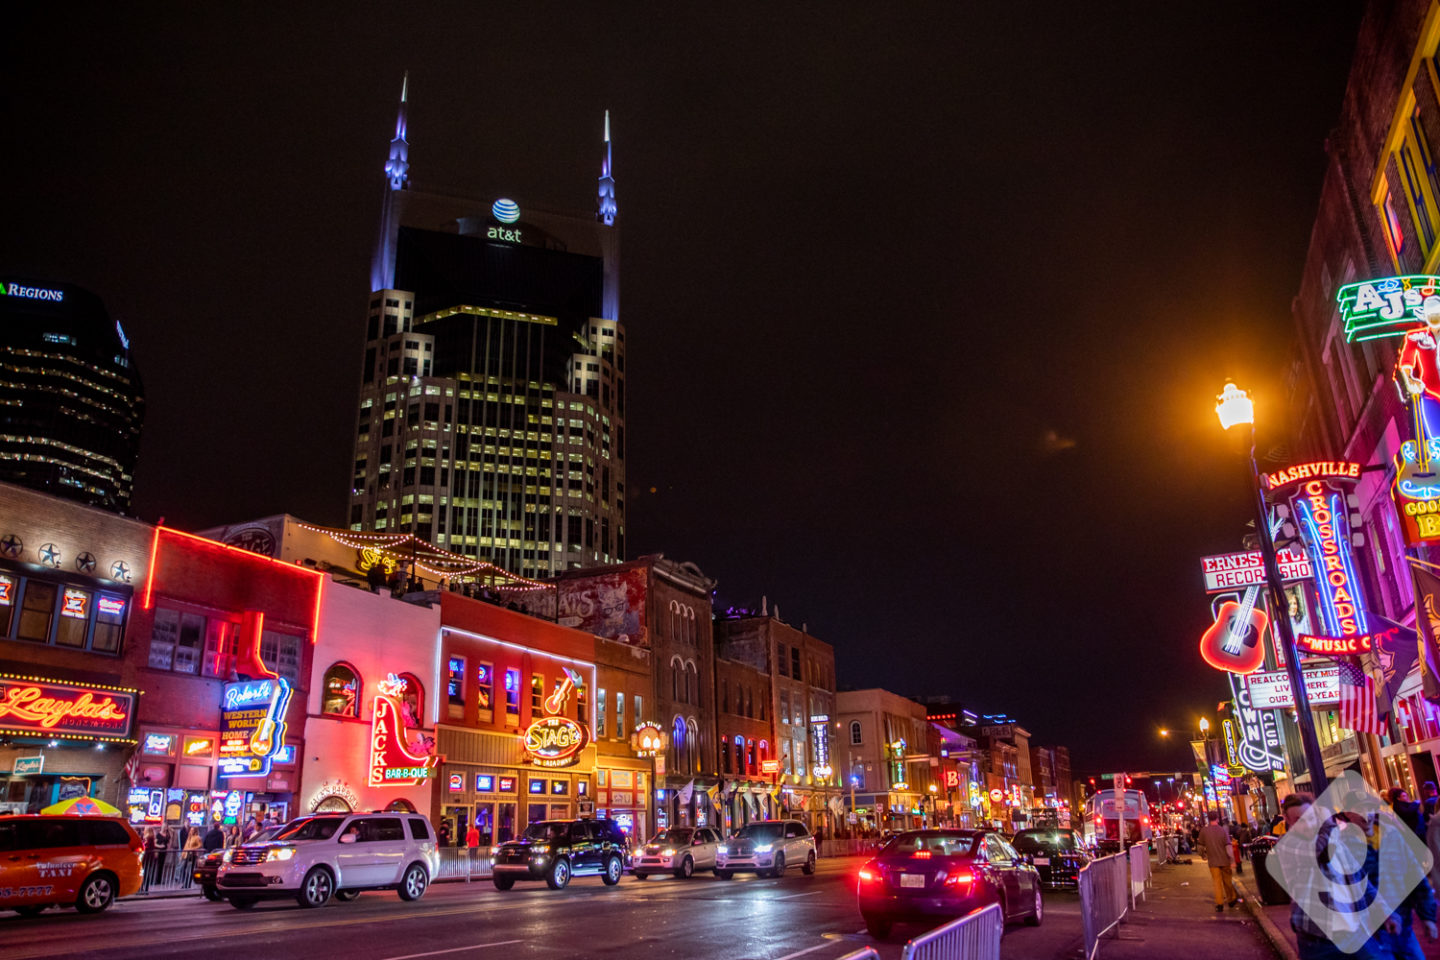 Lower-Broadway-Nashville-at-Night-3-scaled.jpg